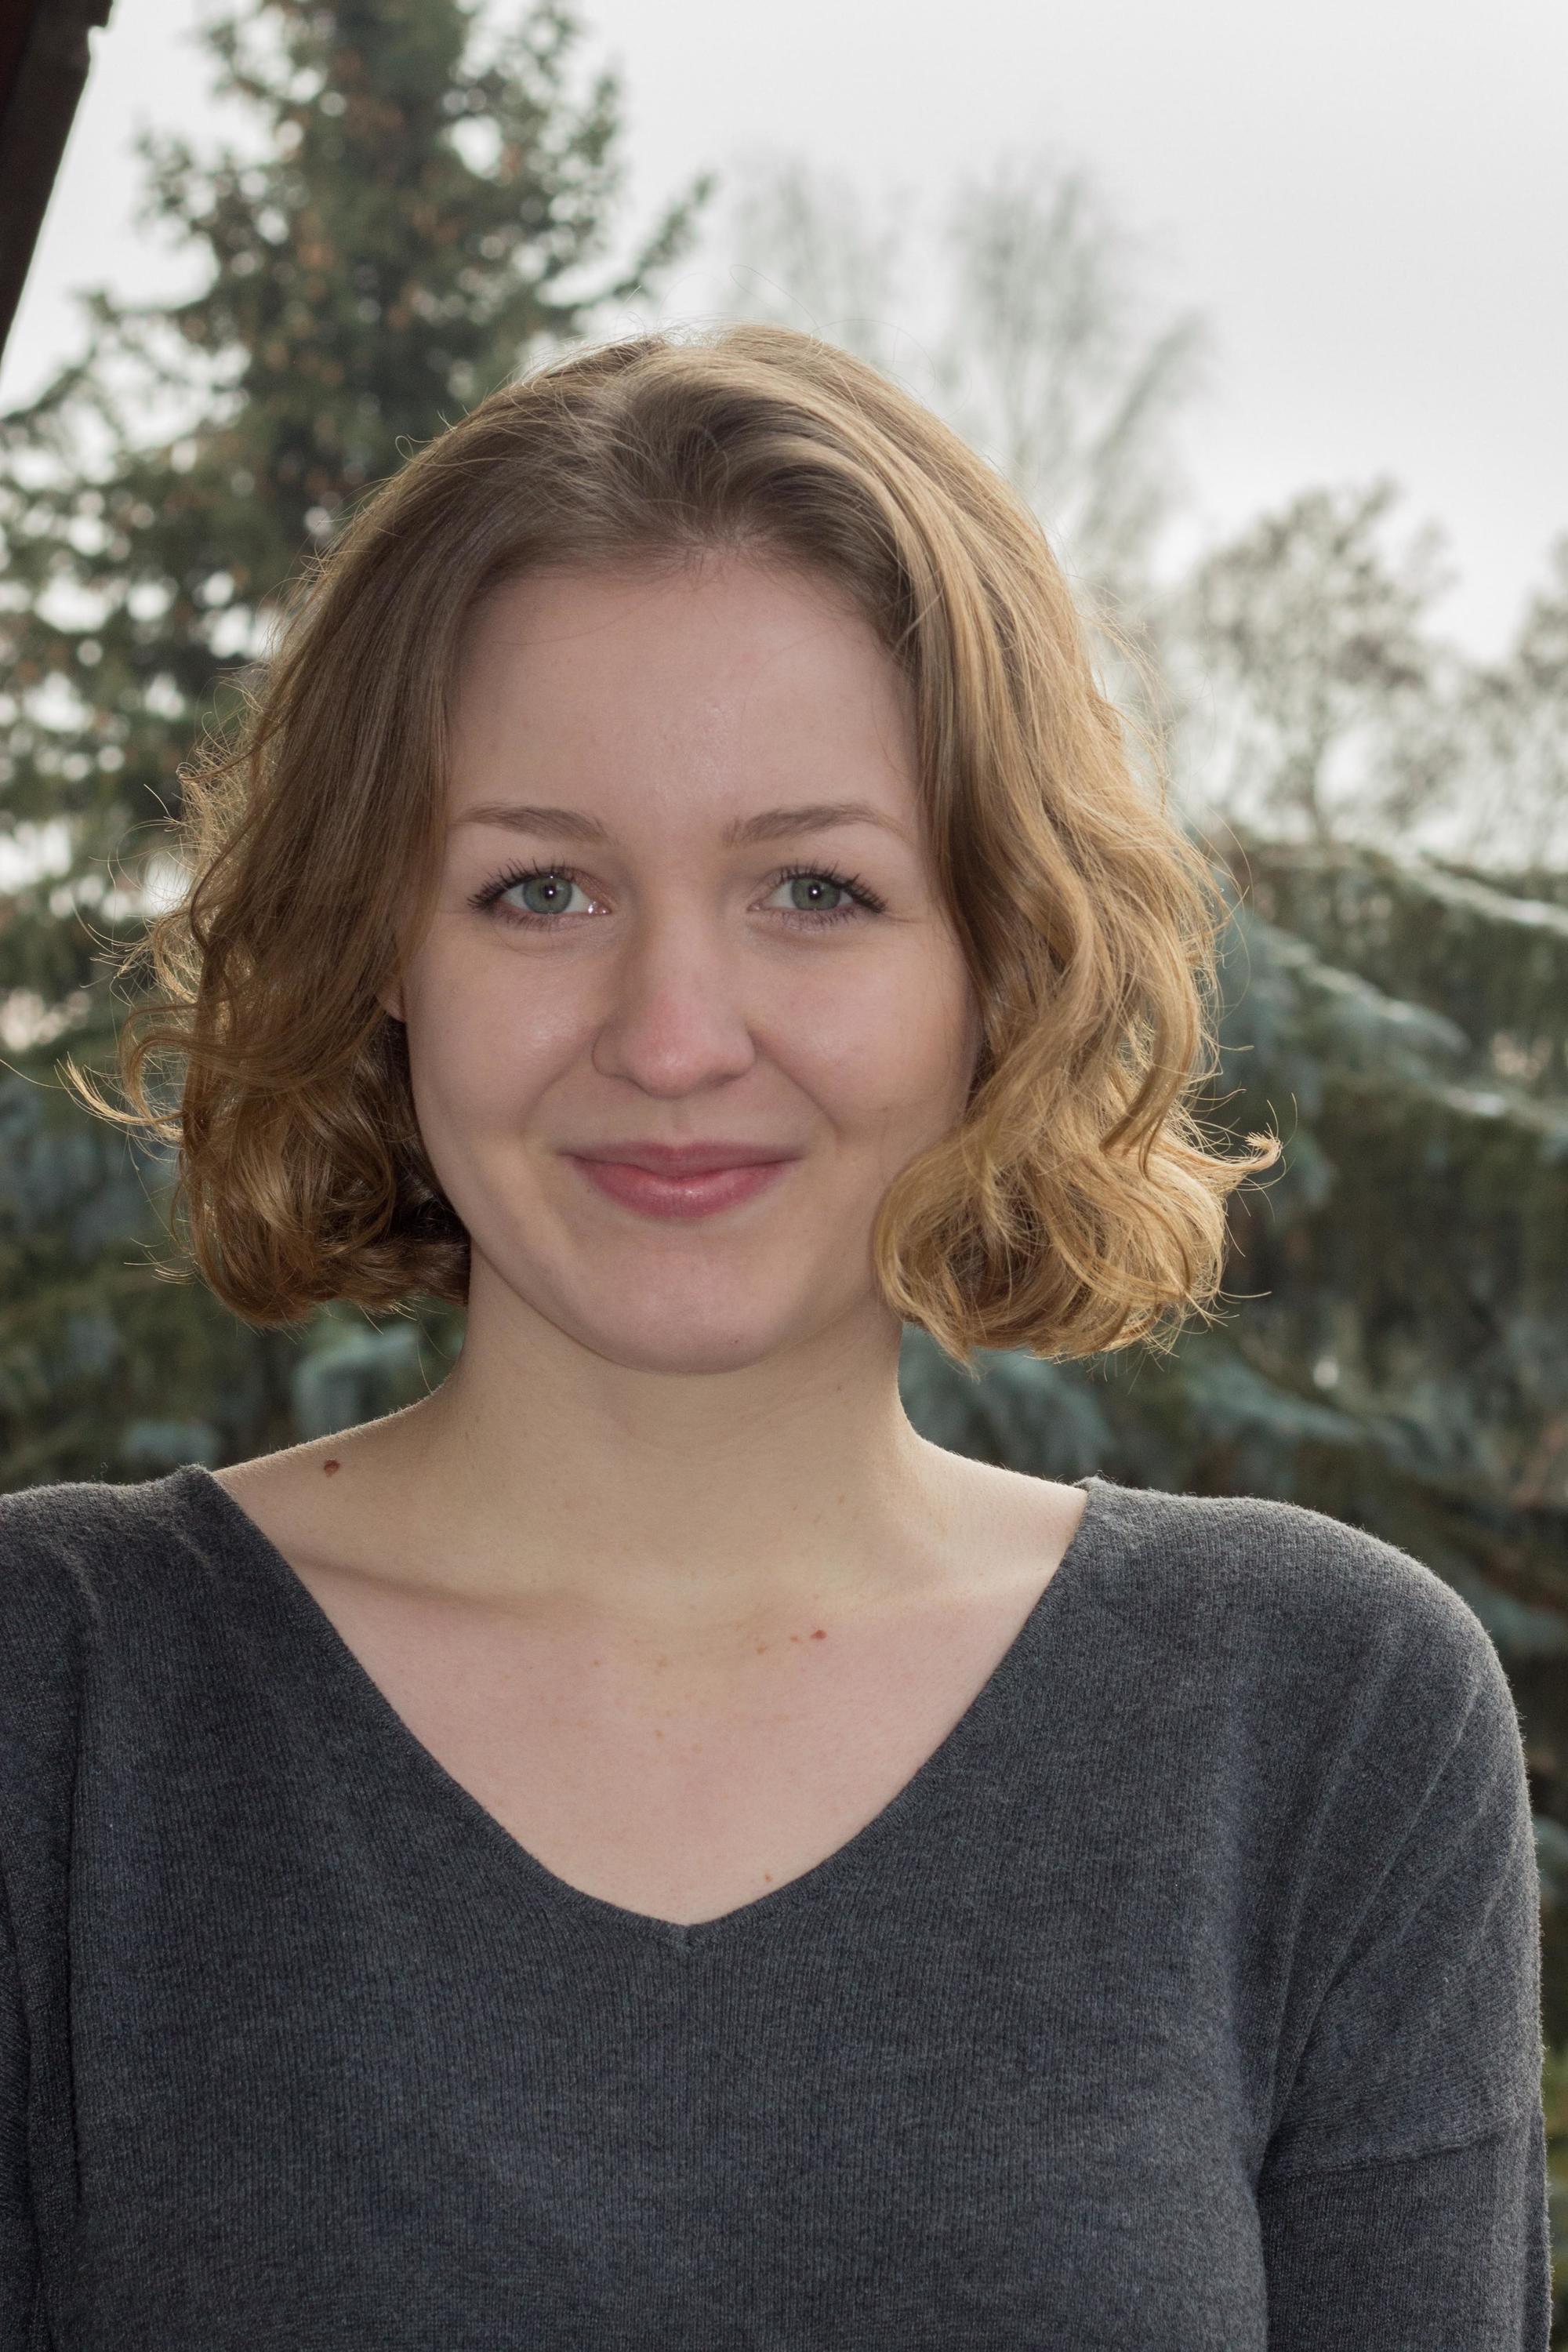 Medizinstudentin Alina Schultze-Berndt